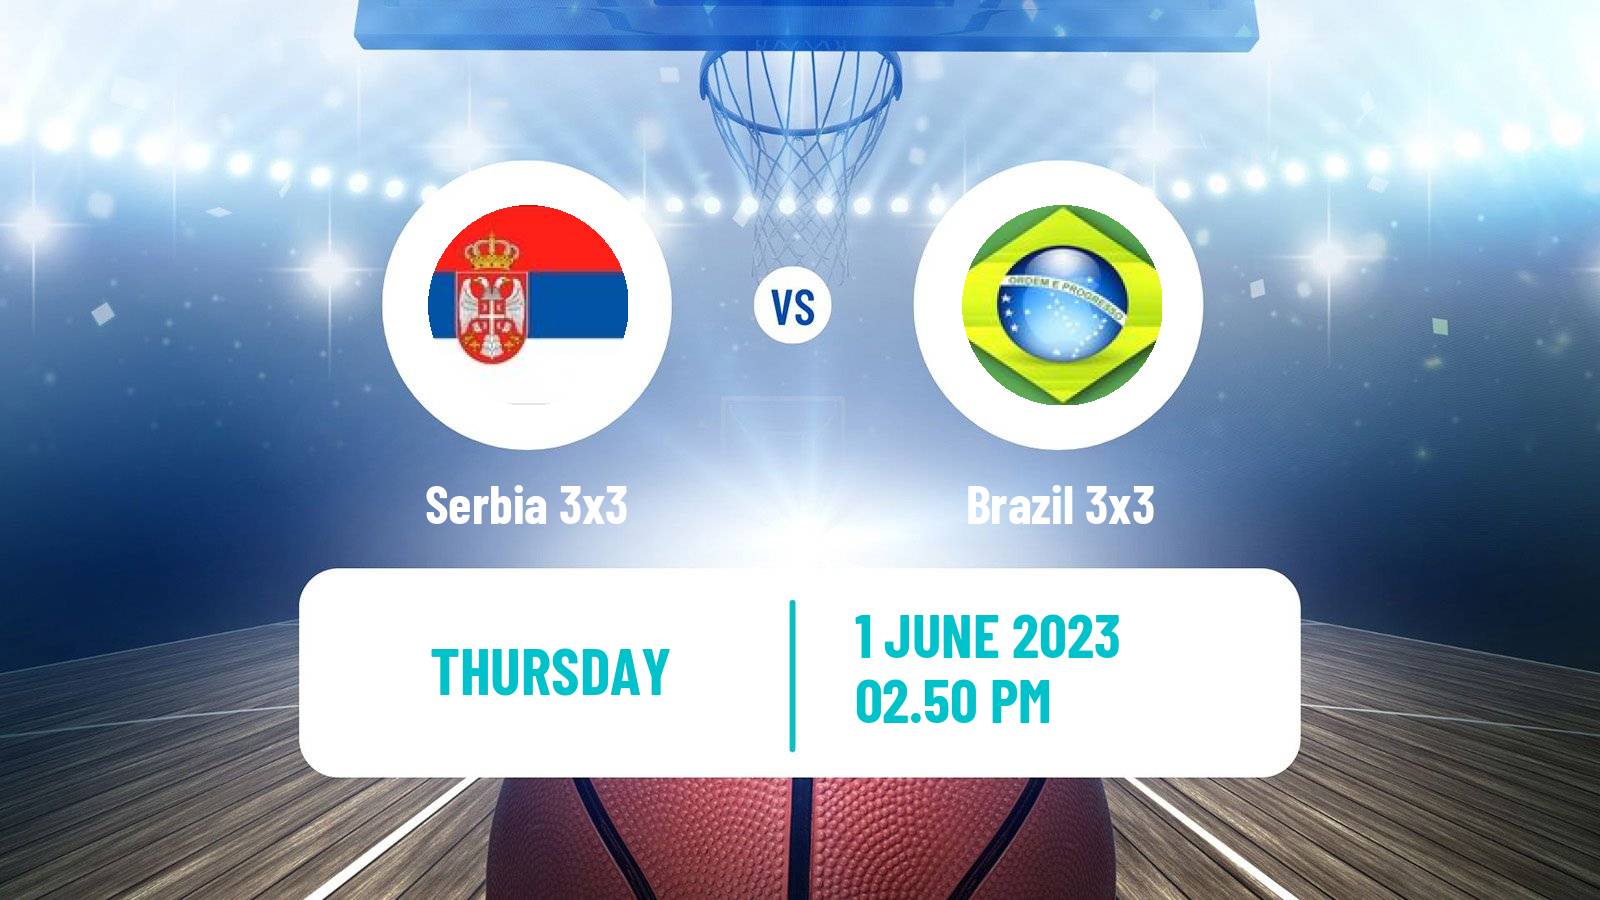 Basketball World Cup Basketball 3x3 Serbia 3x3 - Brazil 3x3